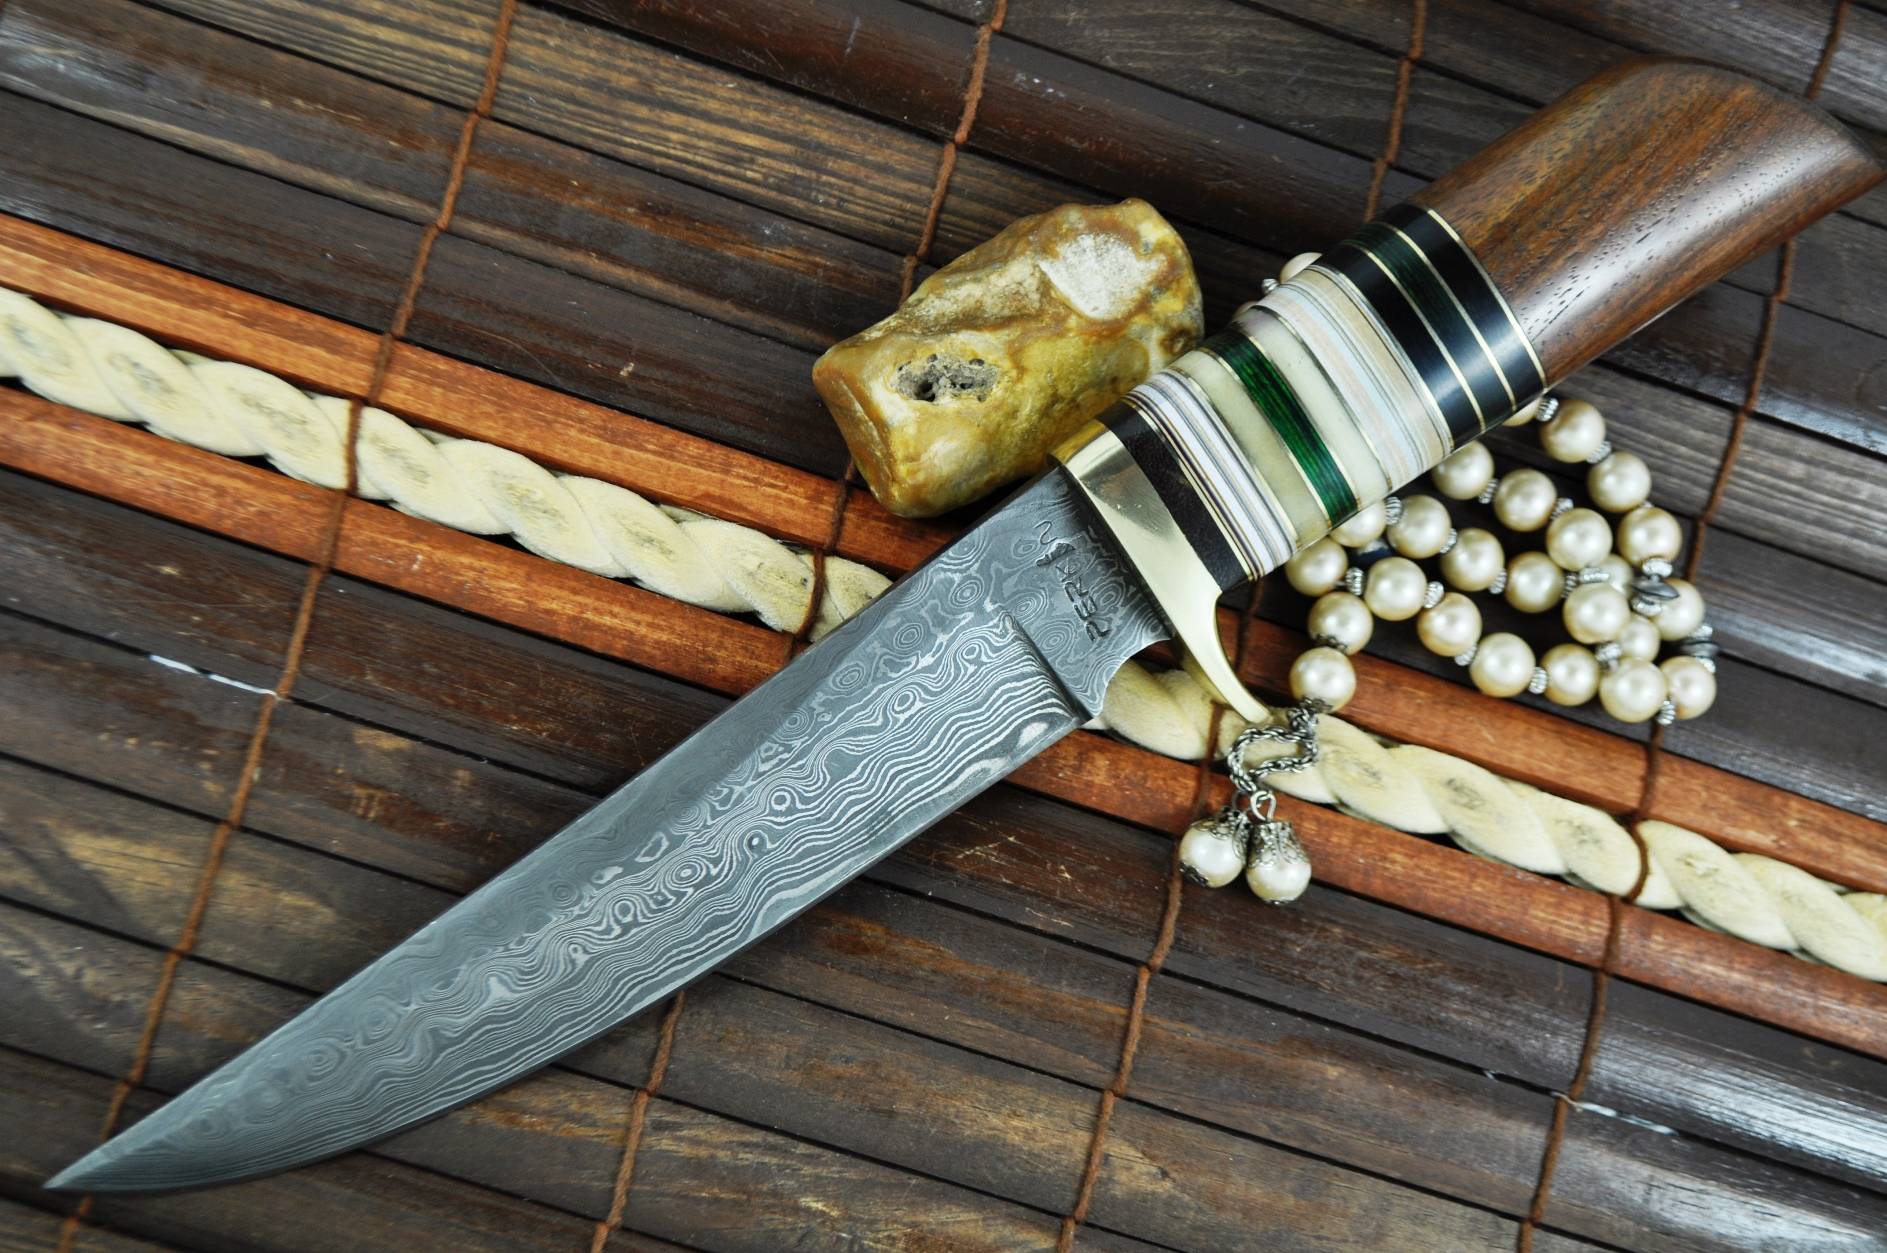 Handmade damascus steel fixed blade hunting knife with sheath - Perkin